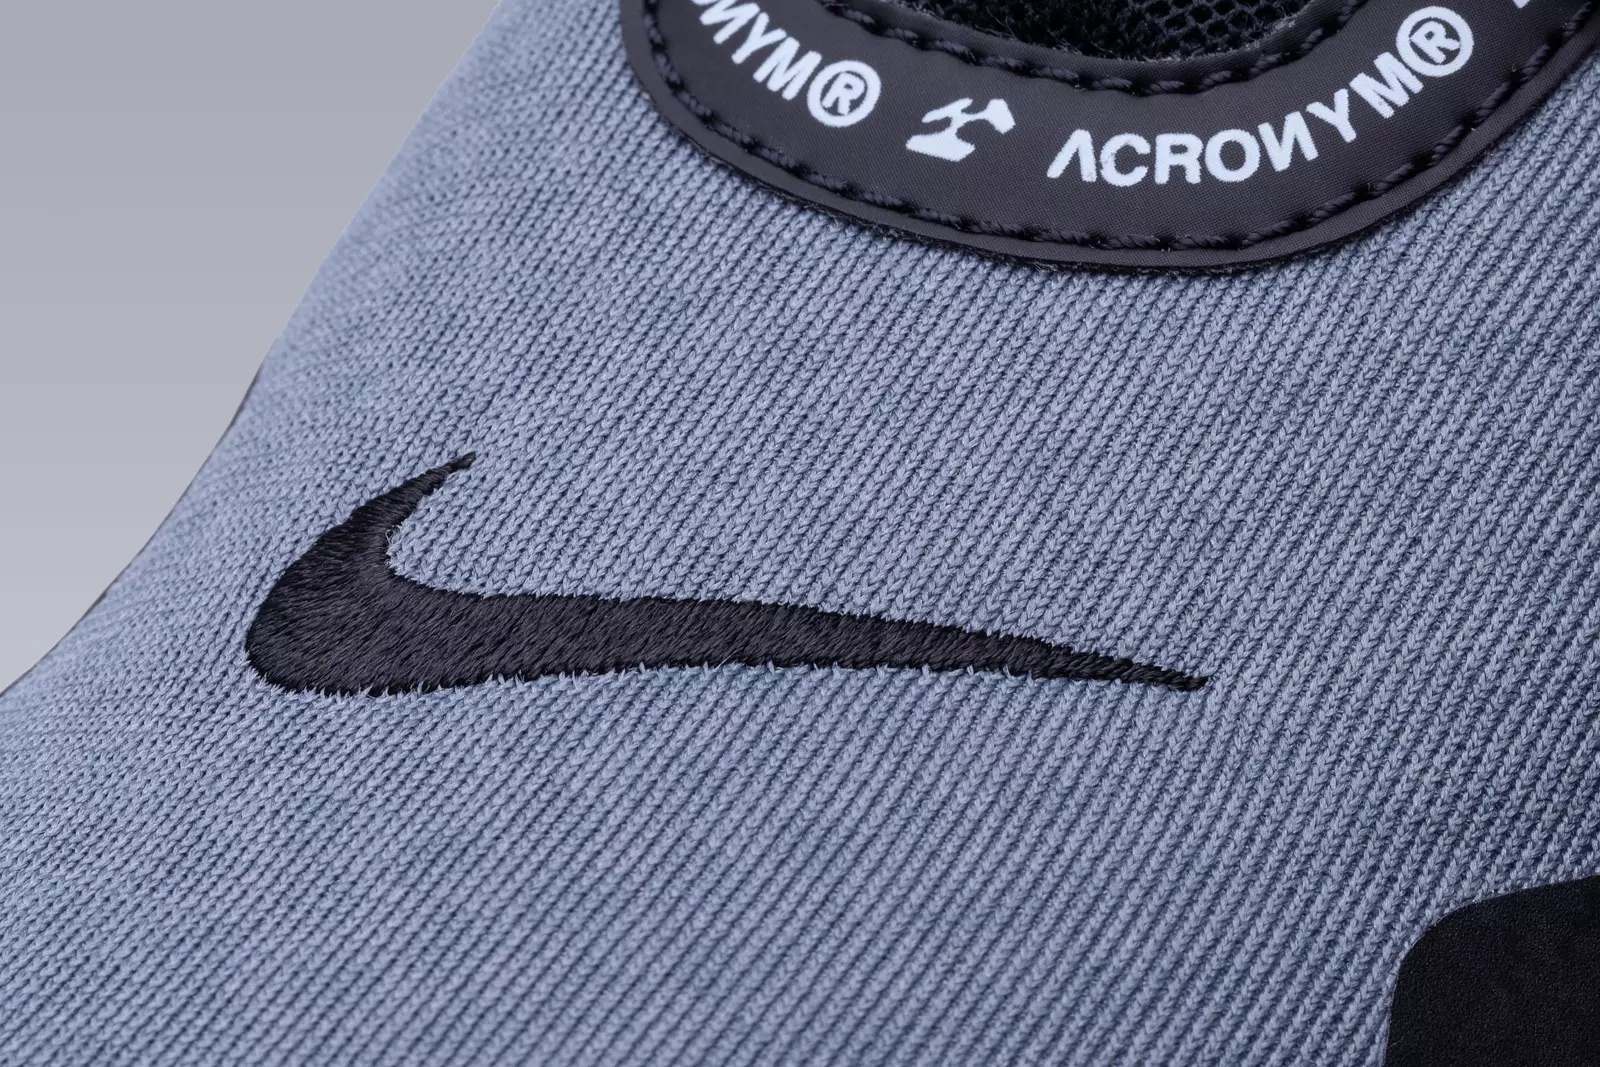 APM2-001 Nike® Air Presto Mid / Acronym® Cool Grey / Black / Black - 10